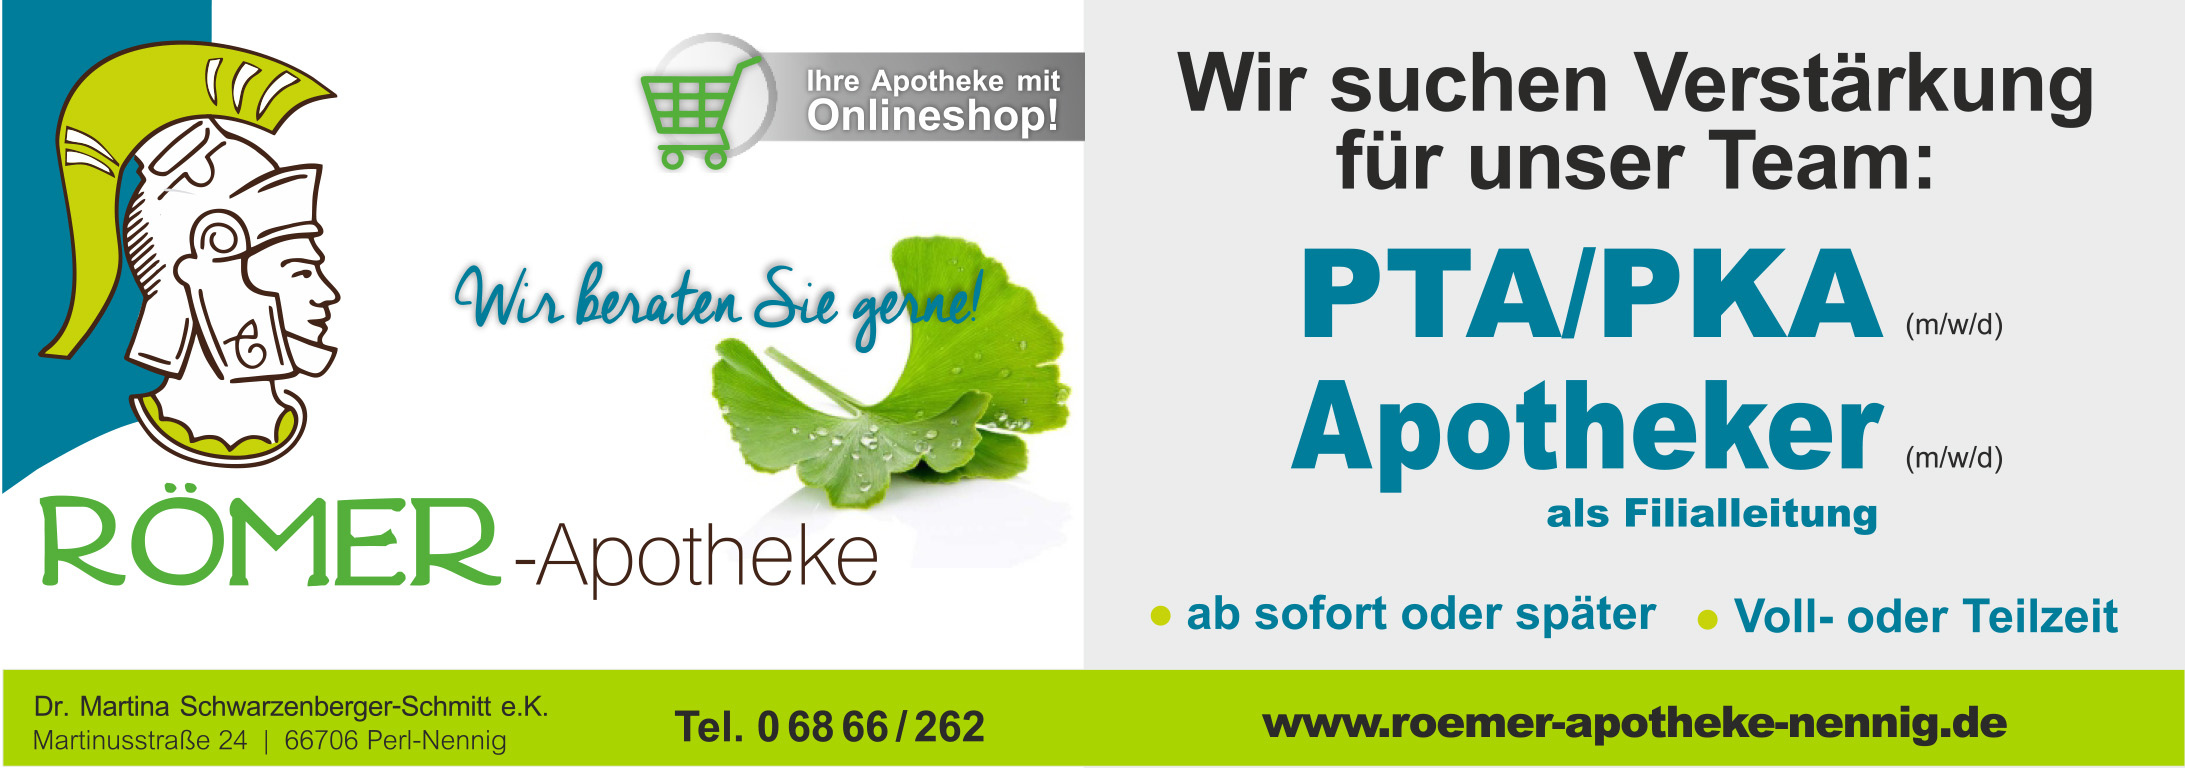 PTA/PKA Anzeige